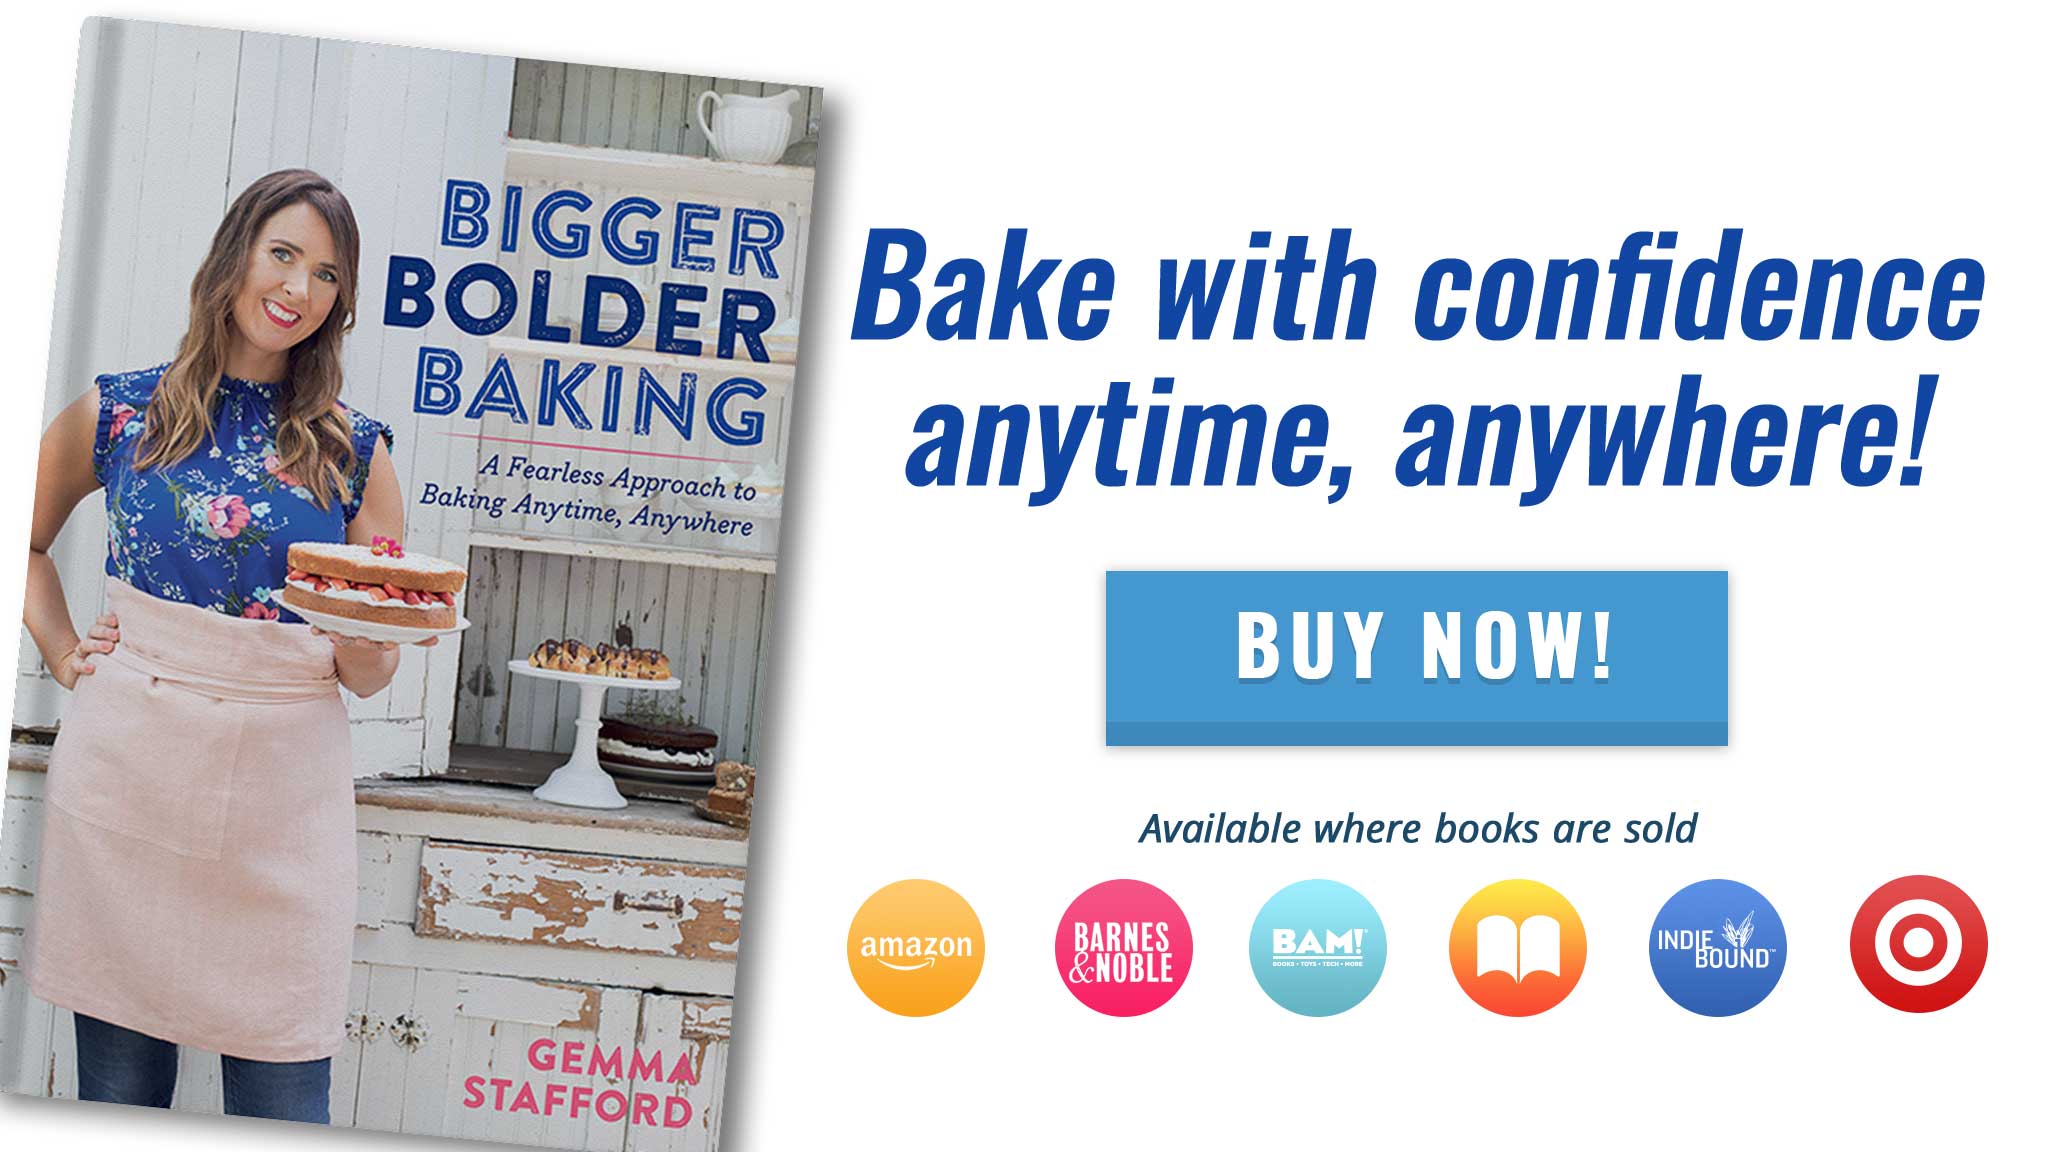 Buy the Bigger Bolder Baking Cookbook by Gemma Stafford